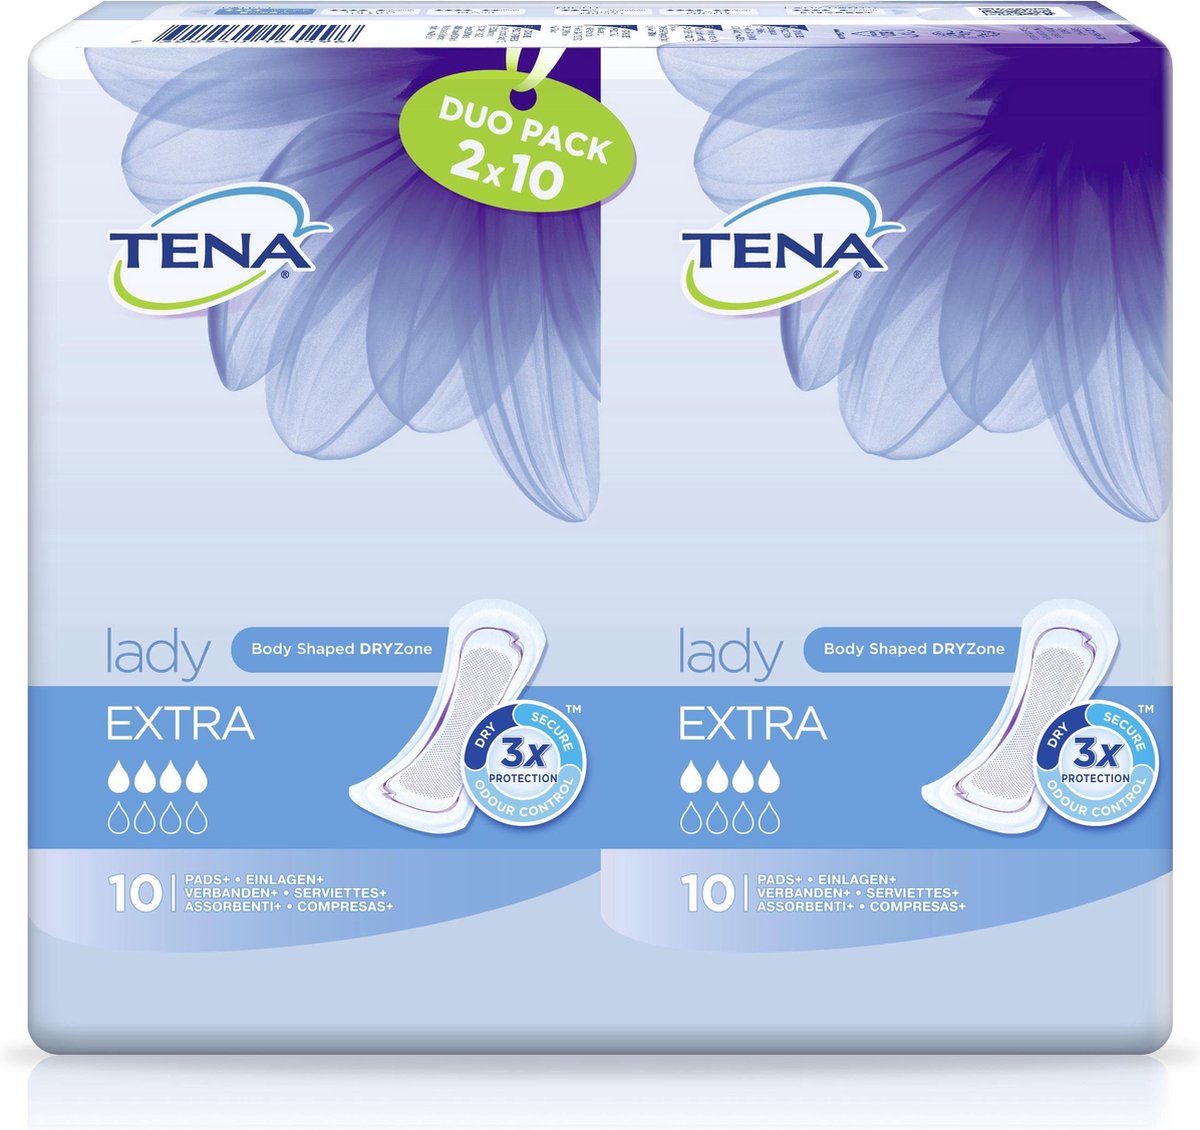 TENA Lady Extra Verbanden Duopack 2 X 10 stuks - TENA